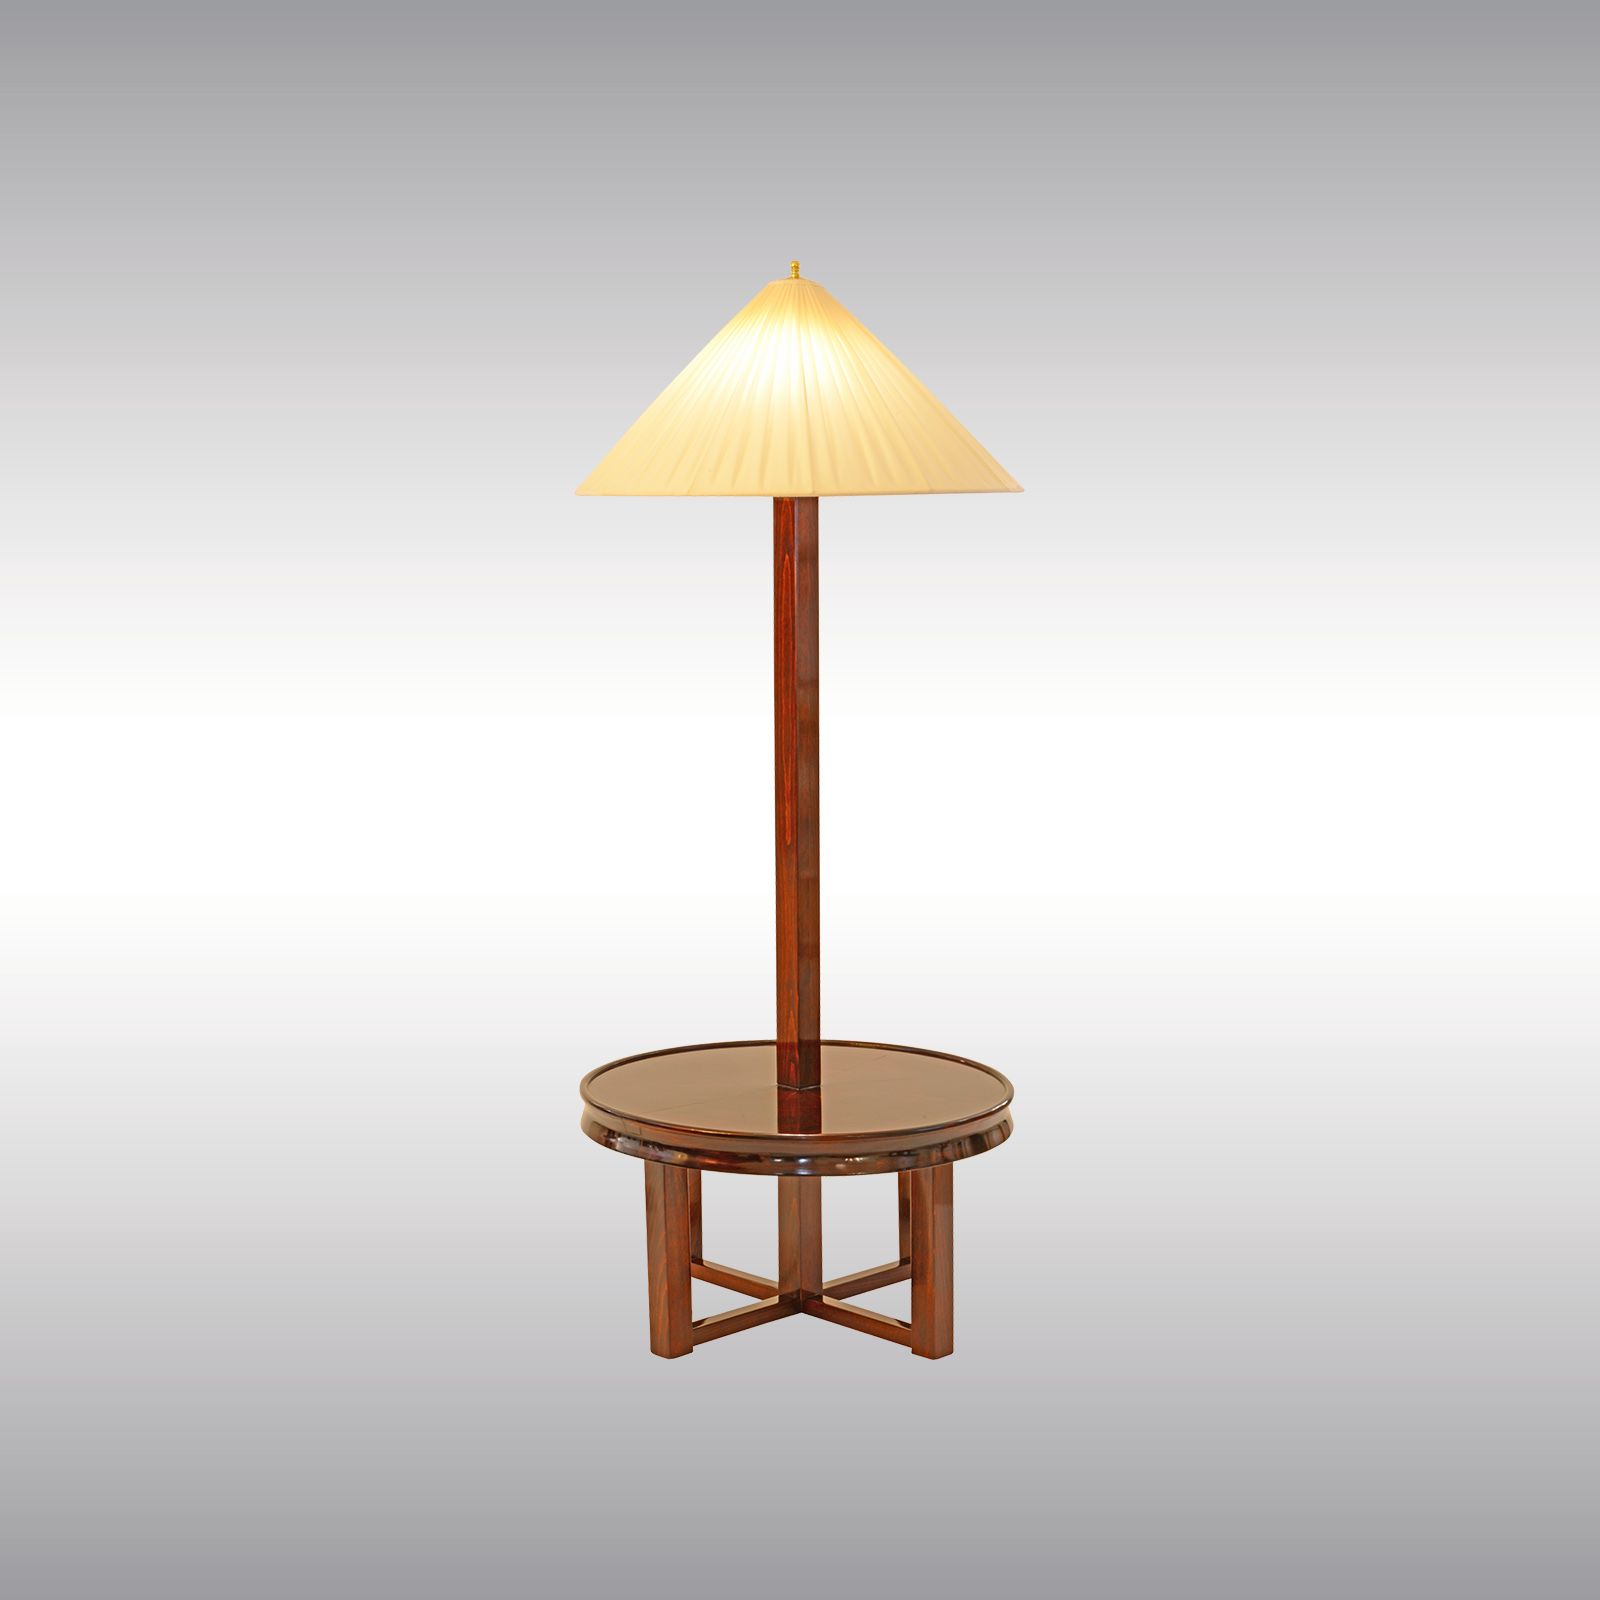 WOKA LAMPS VIENNA - OrderNr.: 20319|WW-19 - Design: Josef Hoffmann